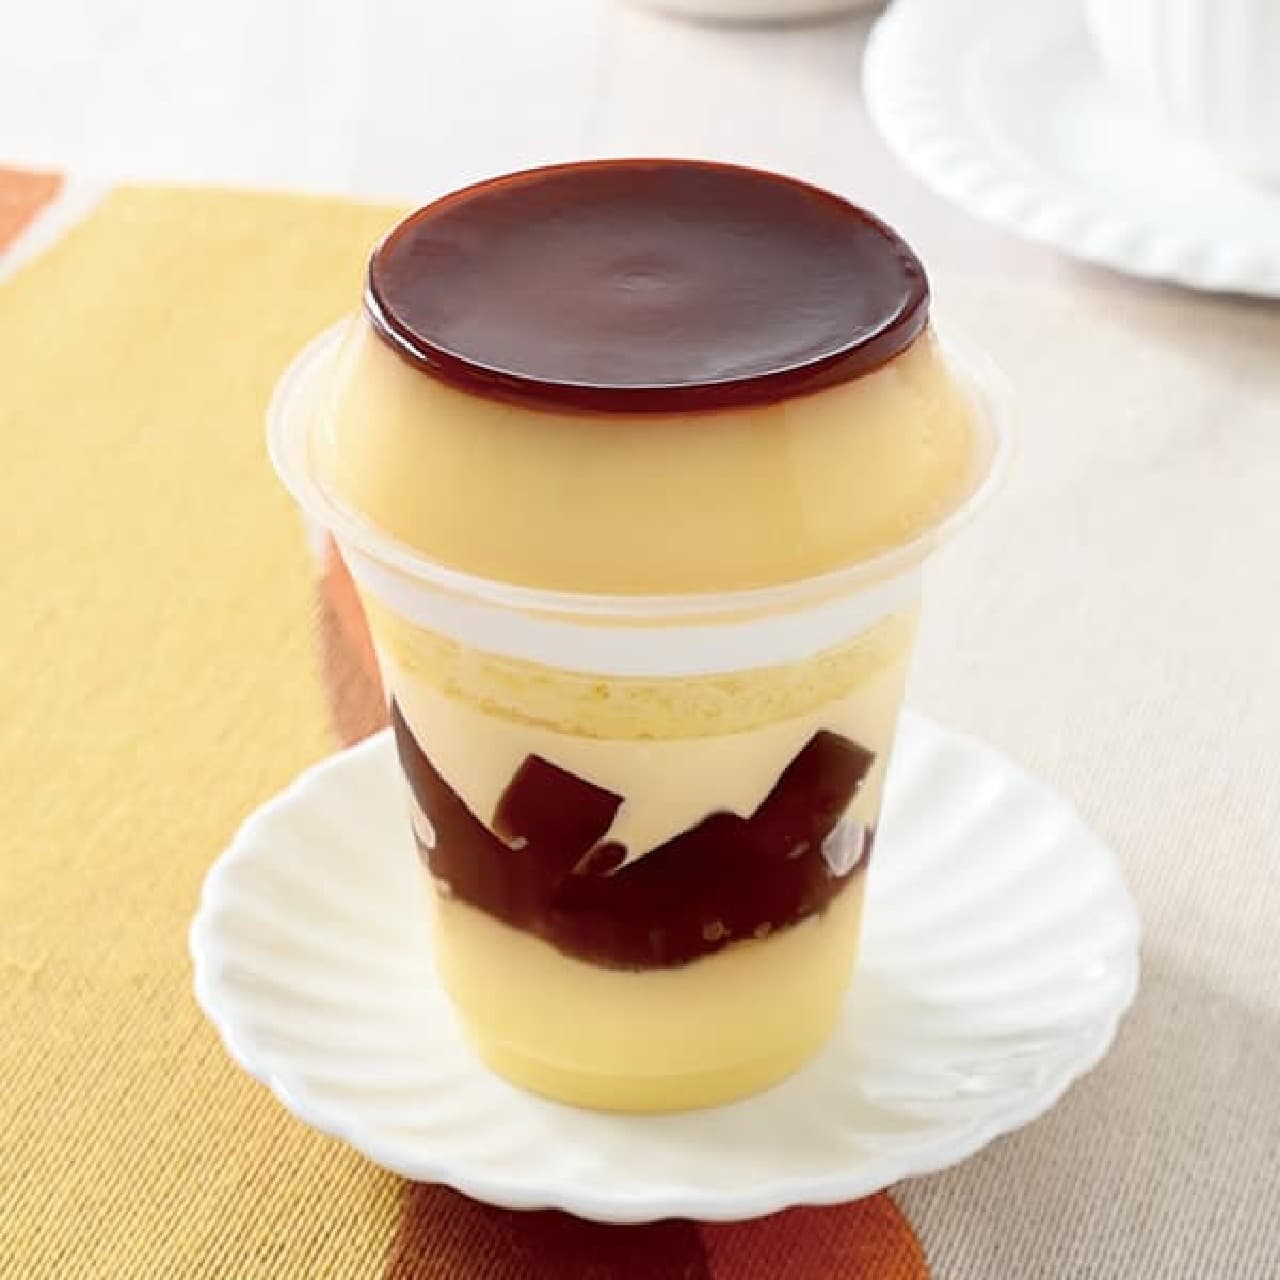 FamilyMart "Oven-baked Pudding Parfait